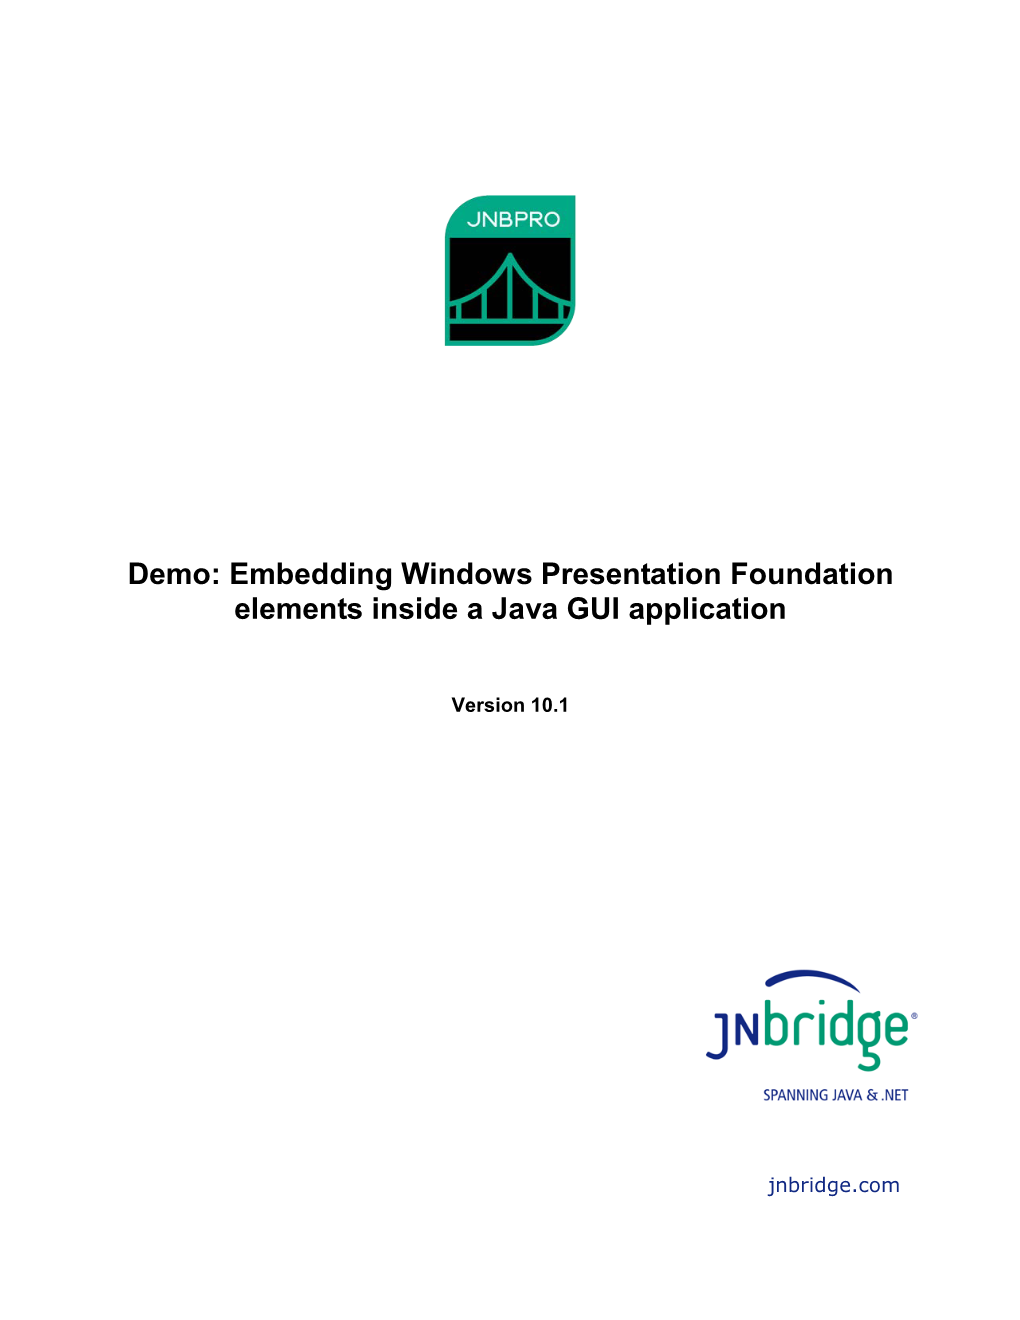 Demo: Embedding Windows Presentation Foundation Elements Inside a Java GUI Application